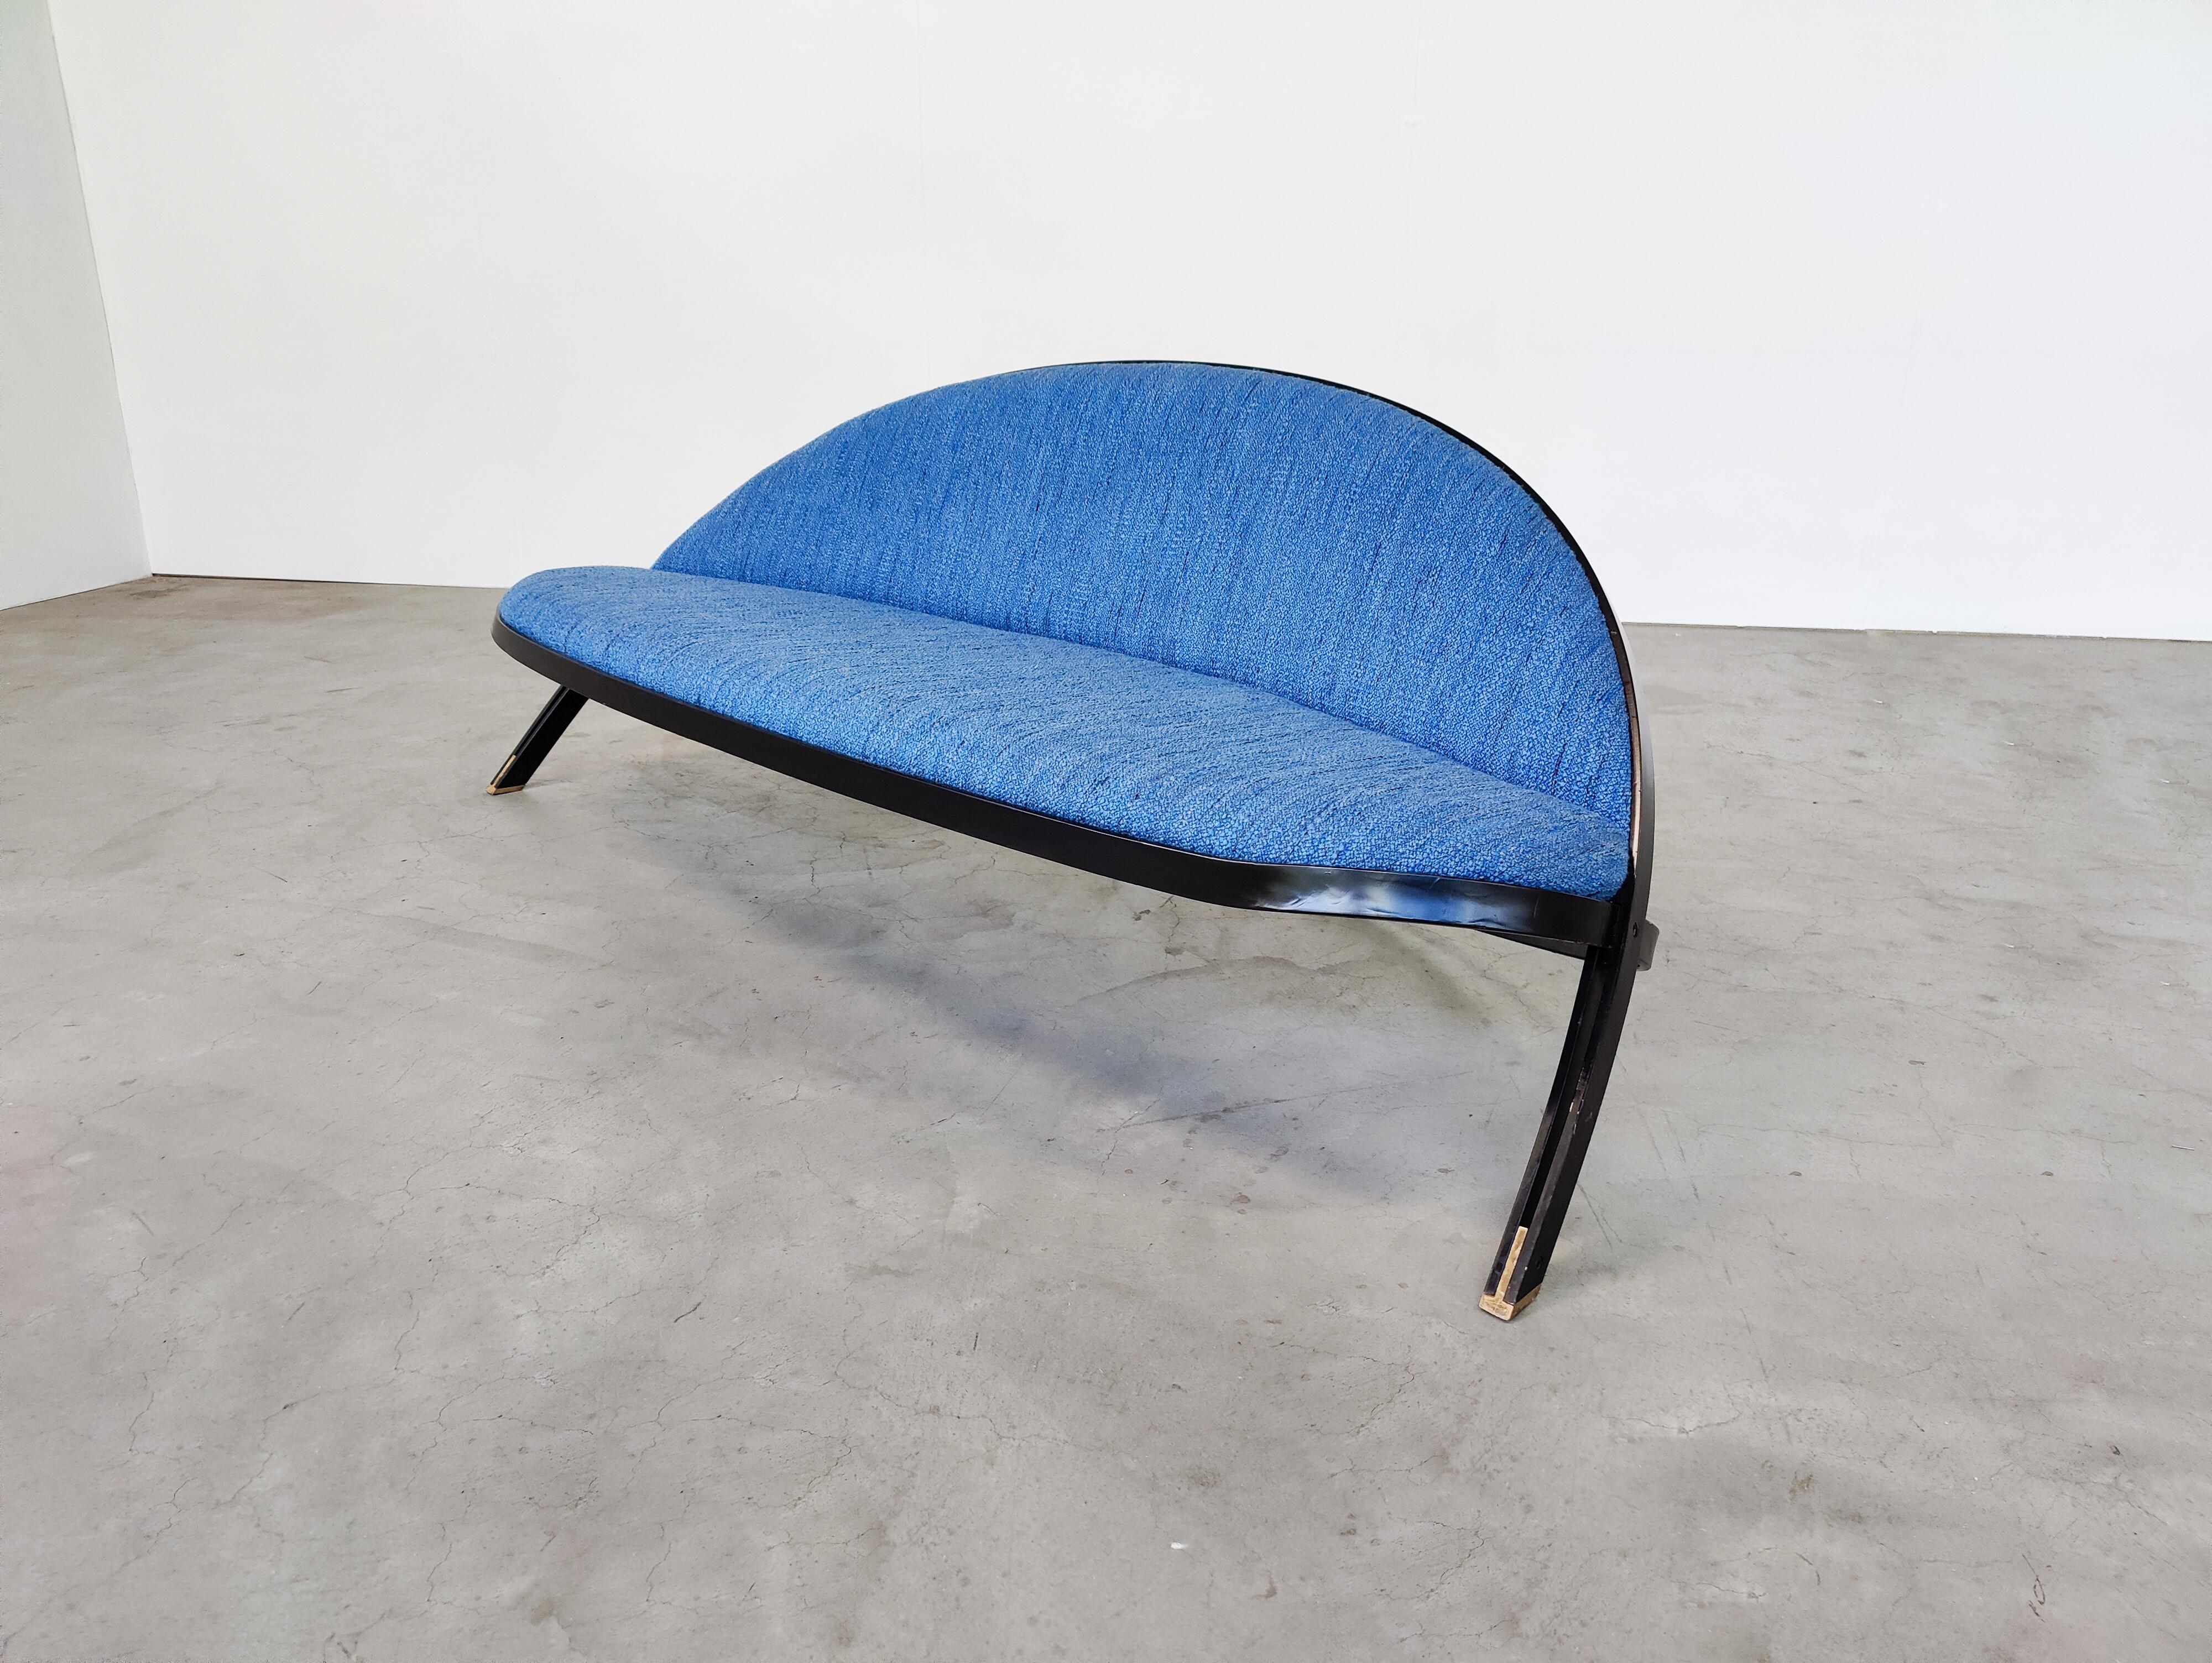 Canapé 'Saturno' bleu, moderne du milieu du siècle, Gastone Rinaldi pour Rima, Italie, 1957